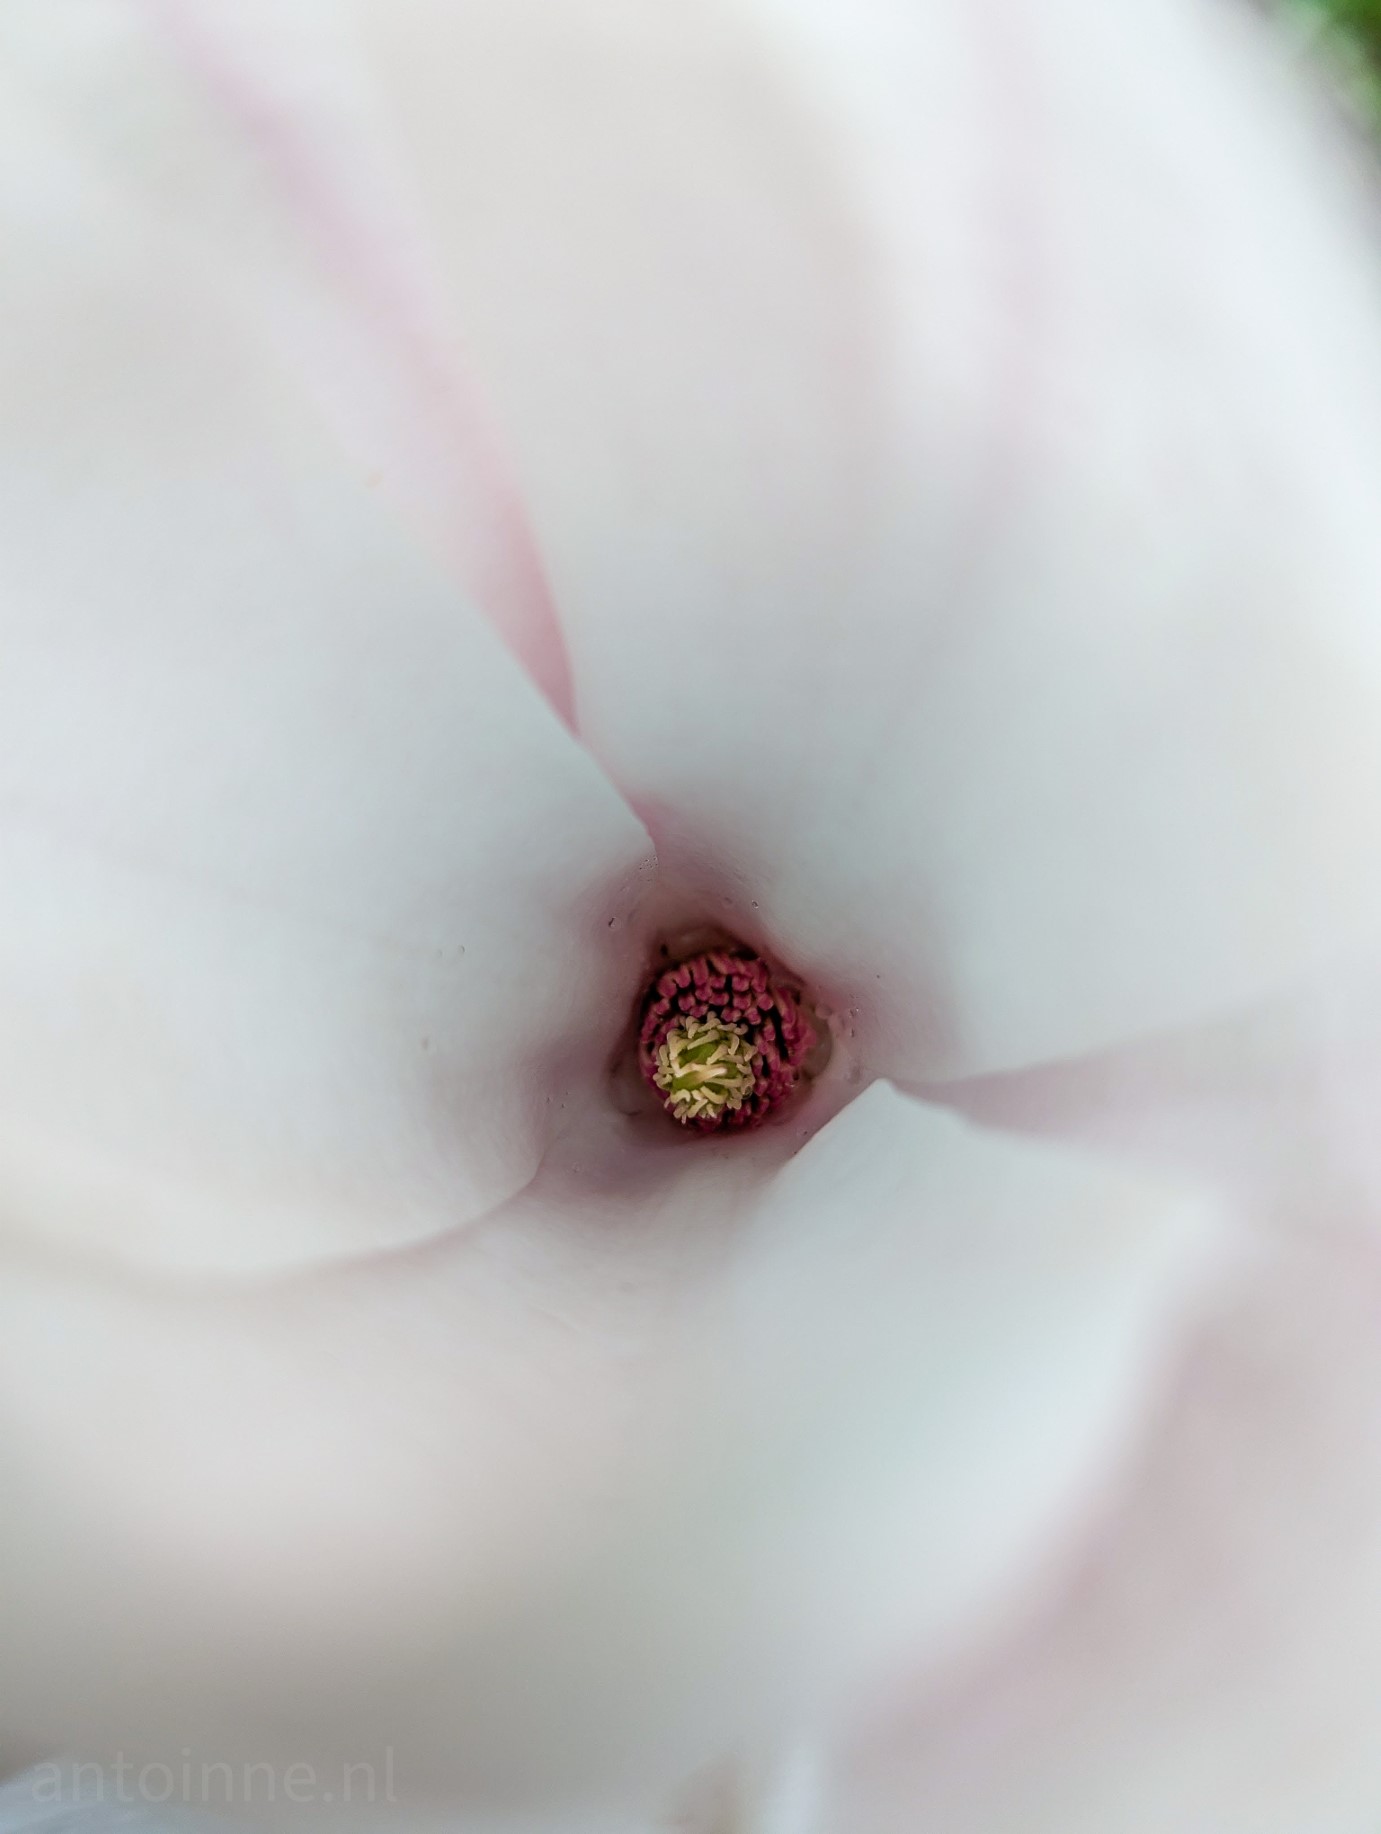 Part of a flower